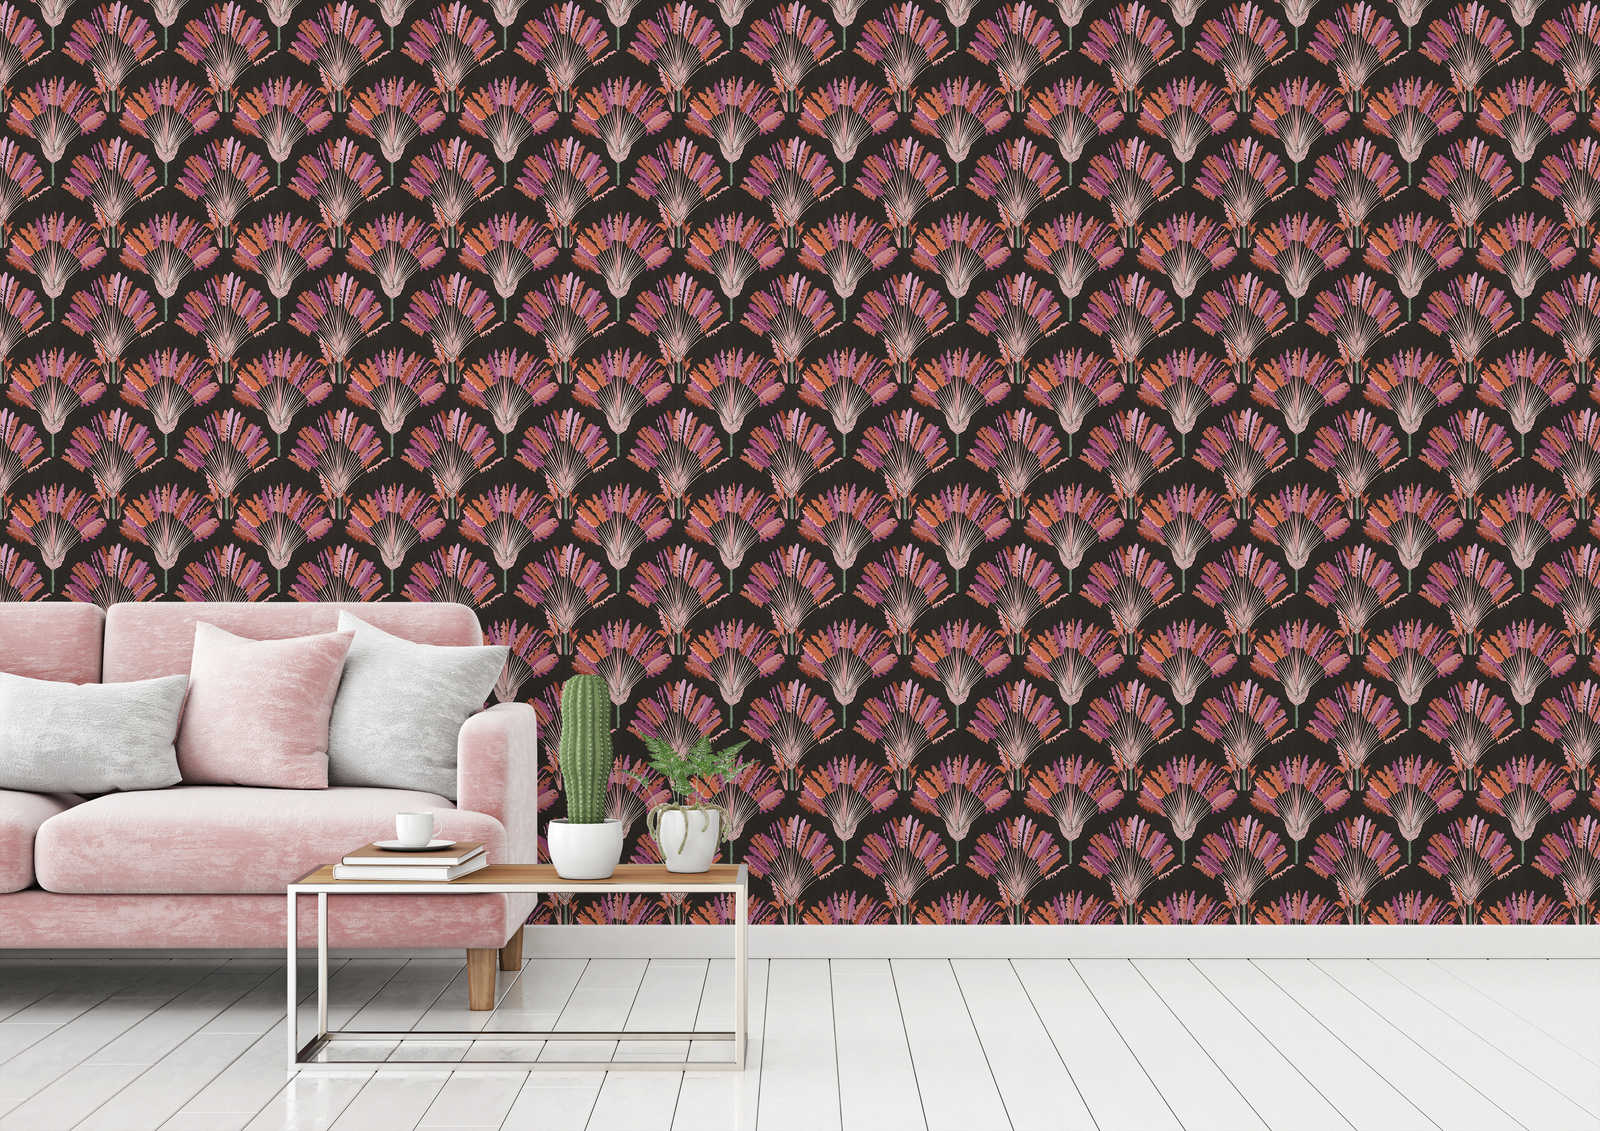             Black wallpaper with purple palm tree pattern
        